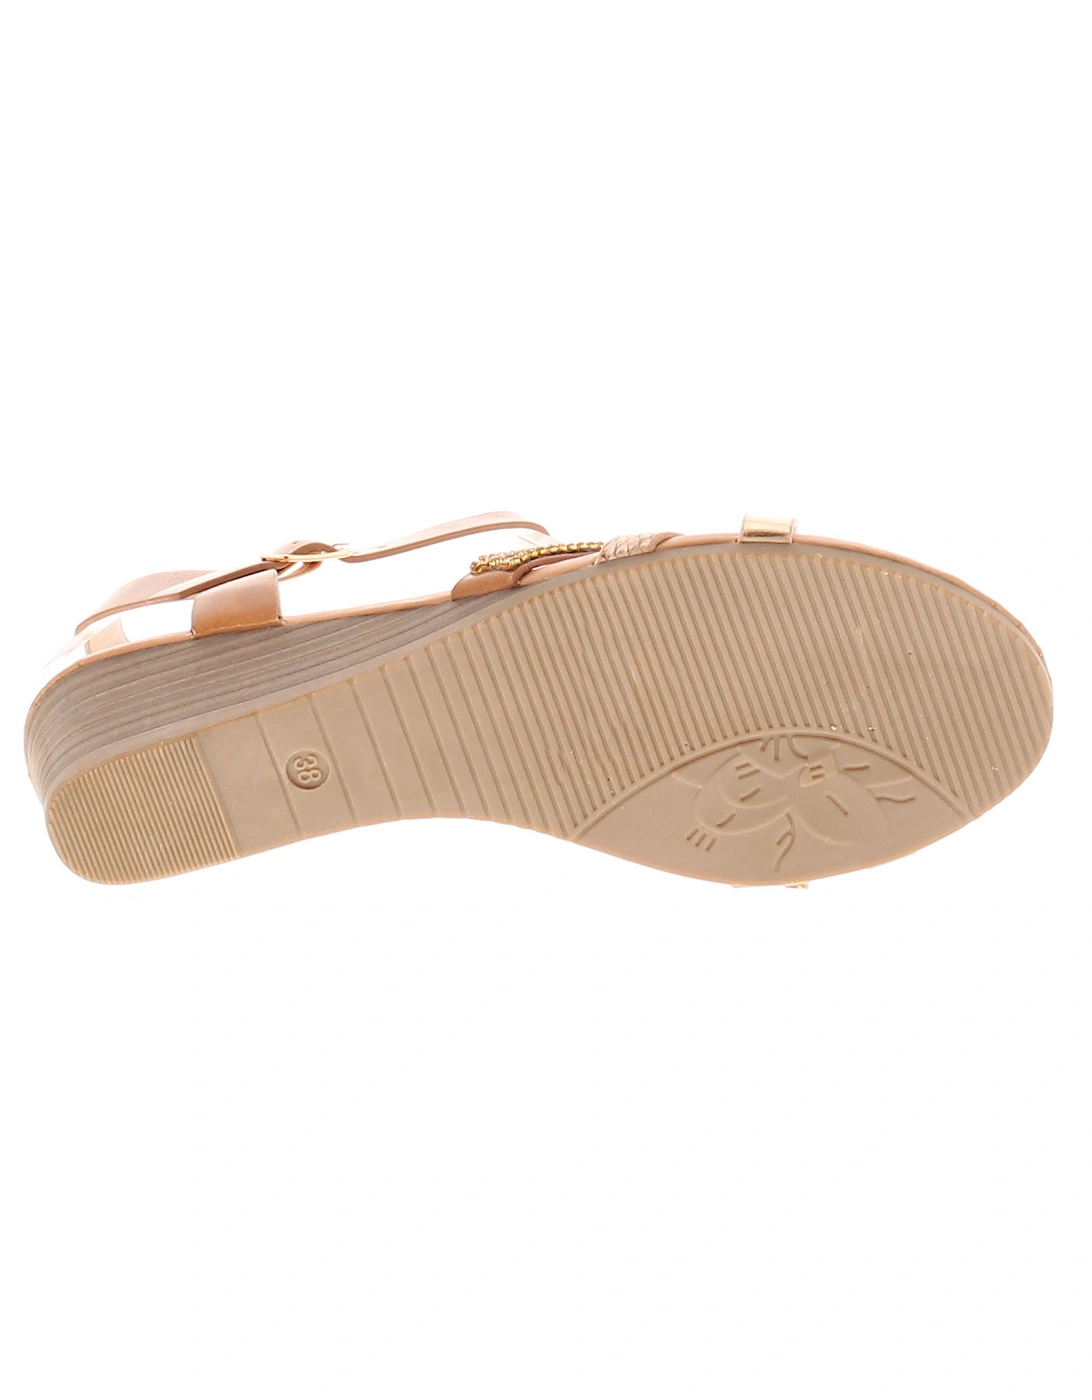 Womens Wedge Sandals Wonder Buckle tan rose gold UK Size